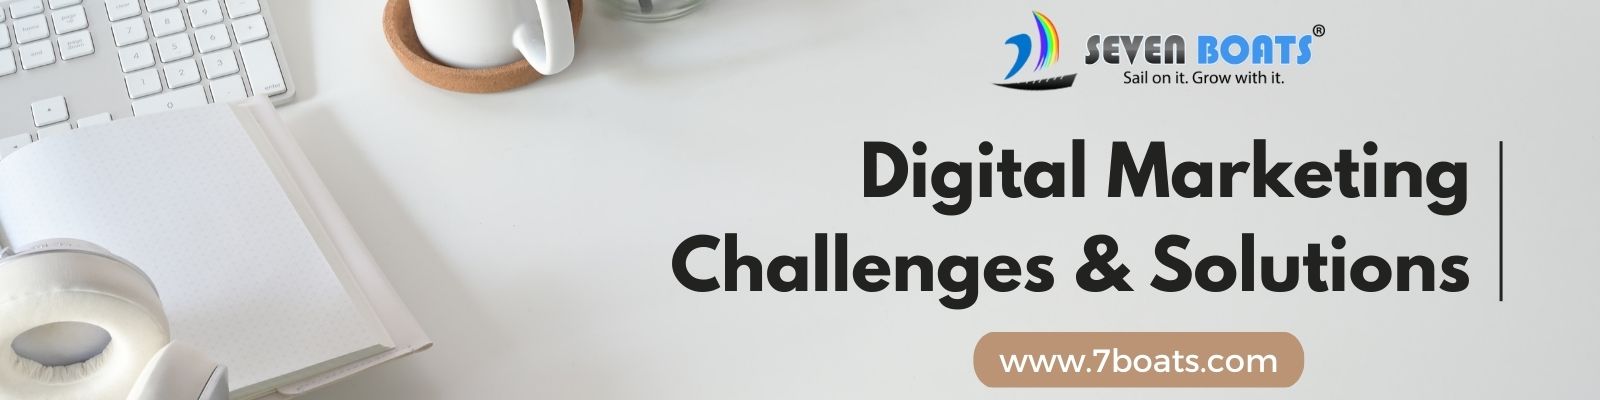 Digital Marketing Challenges & Solutions